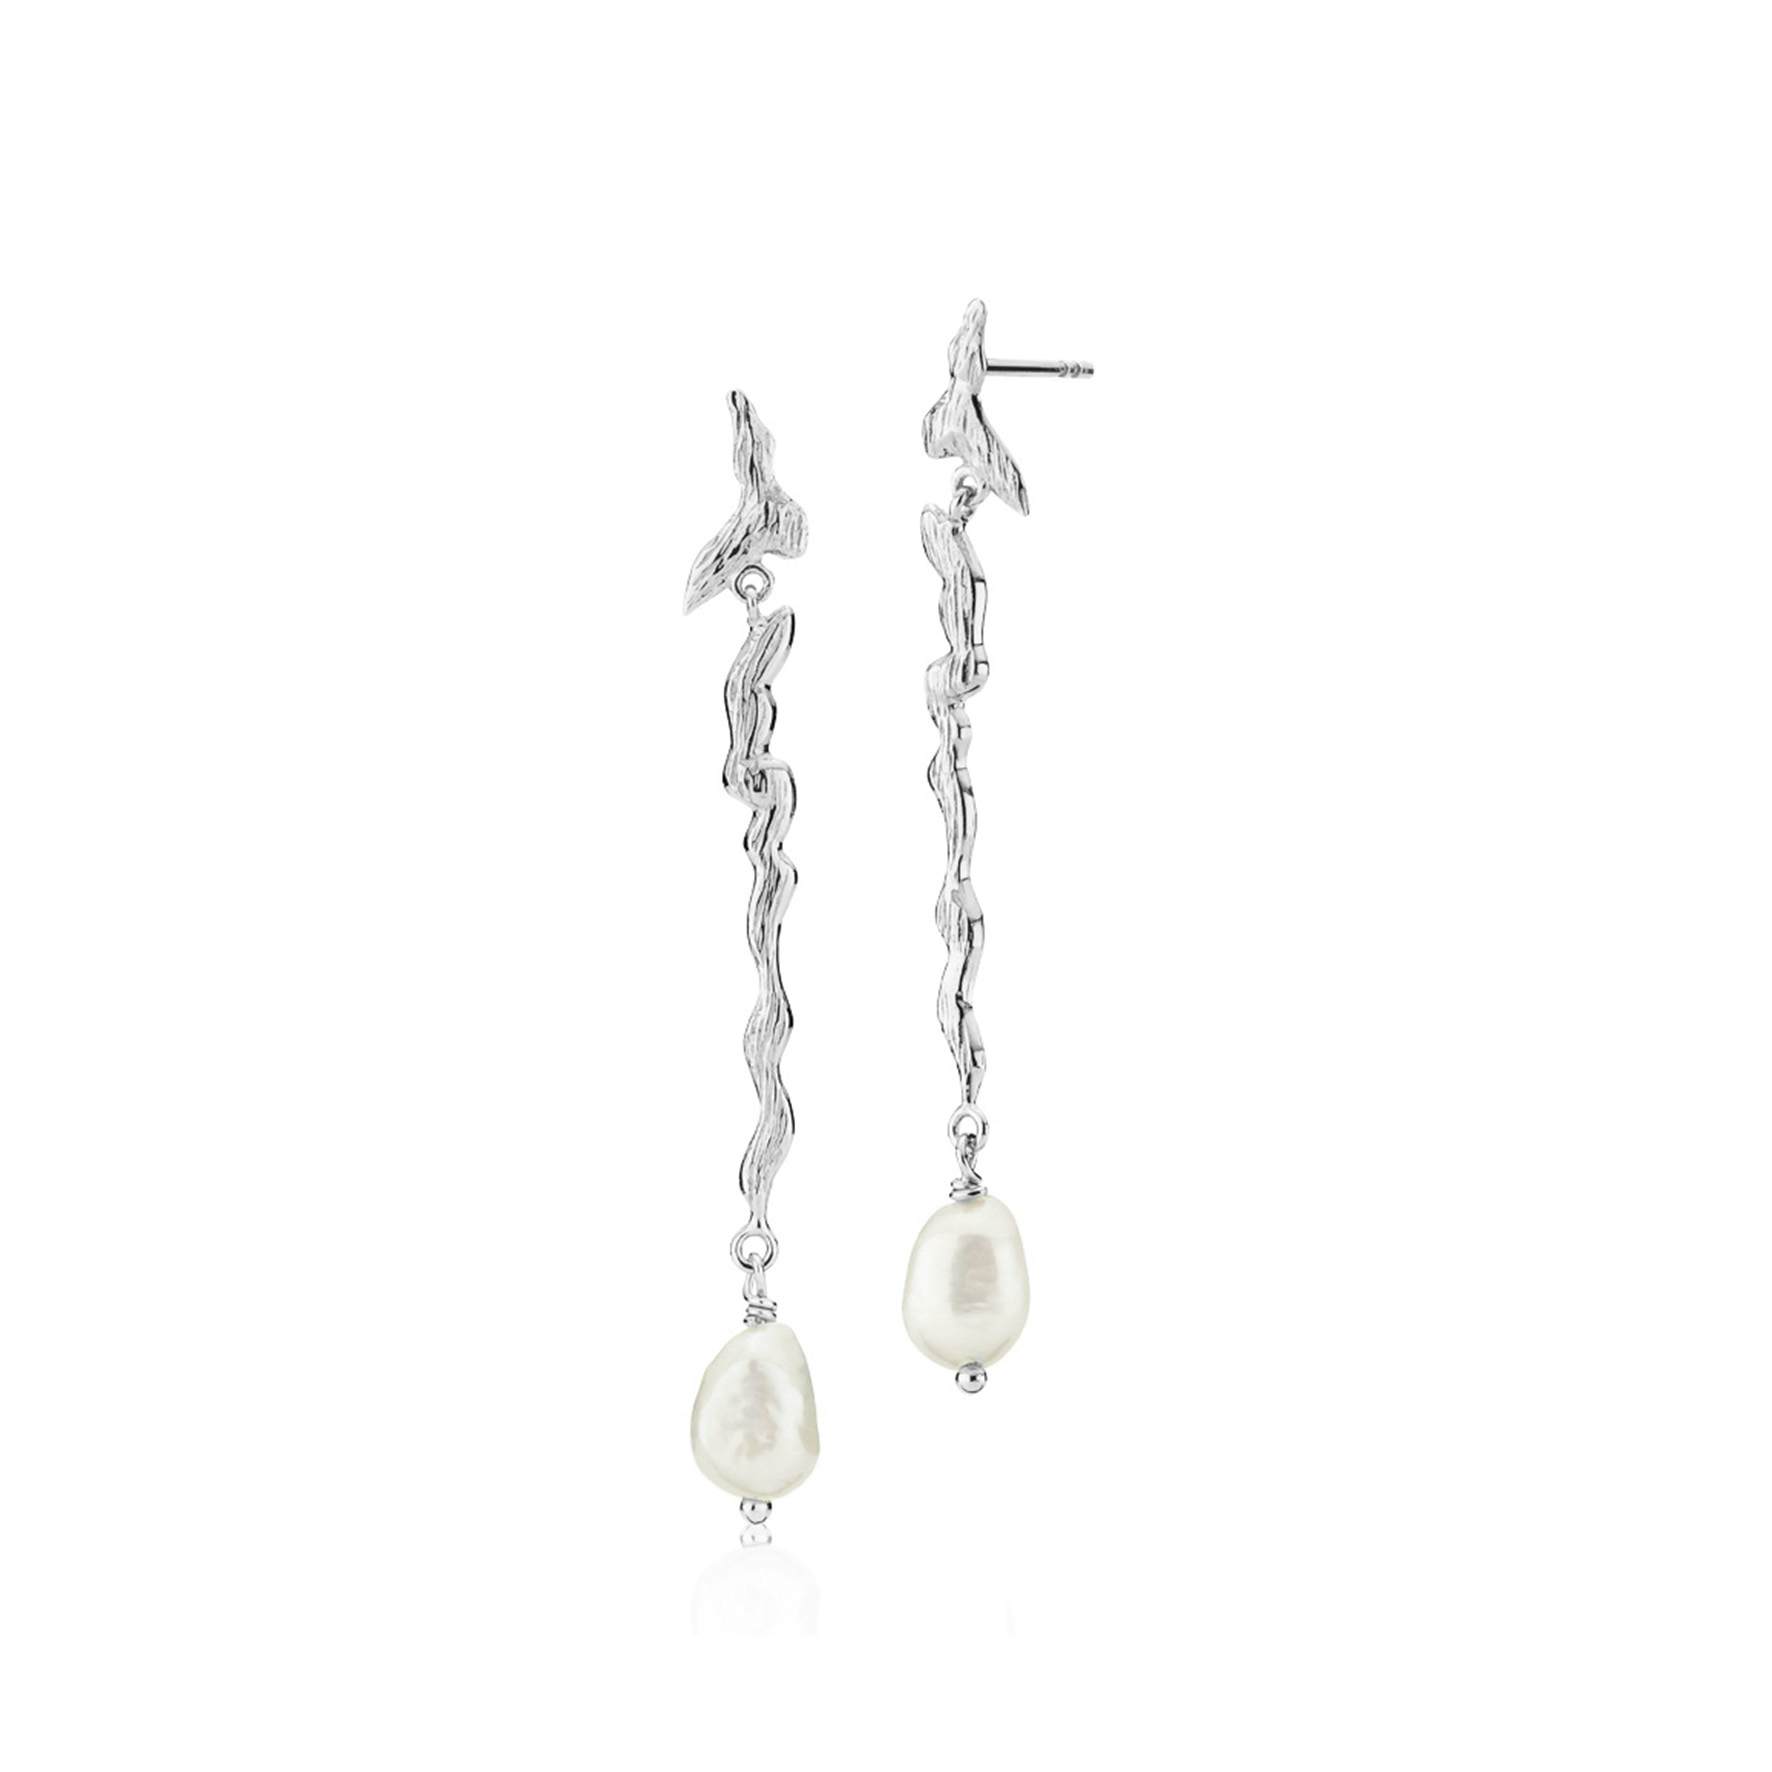 Fairy Long Earrings from Izabel Camille in Silver Sterling 925|Freshwater Pearl